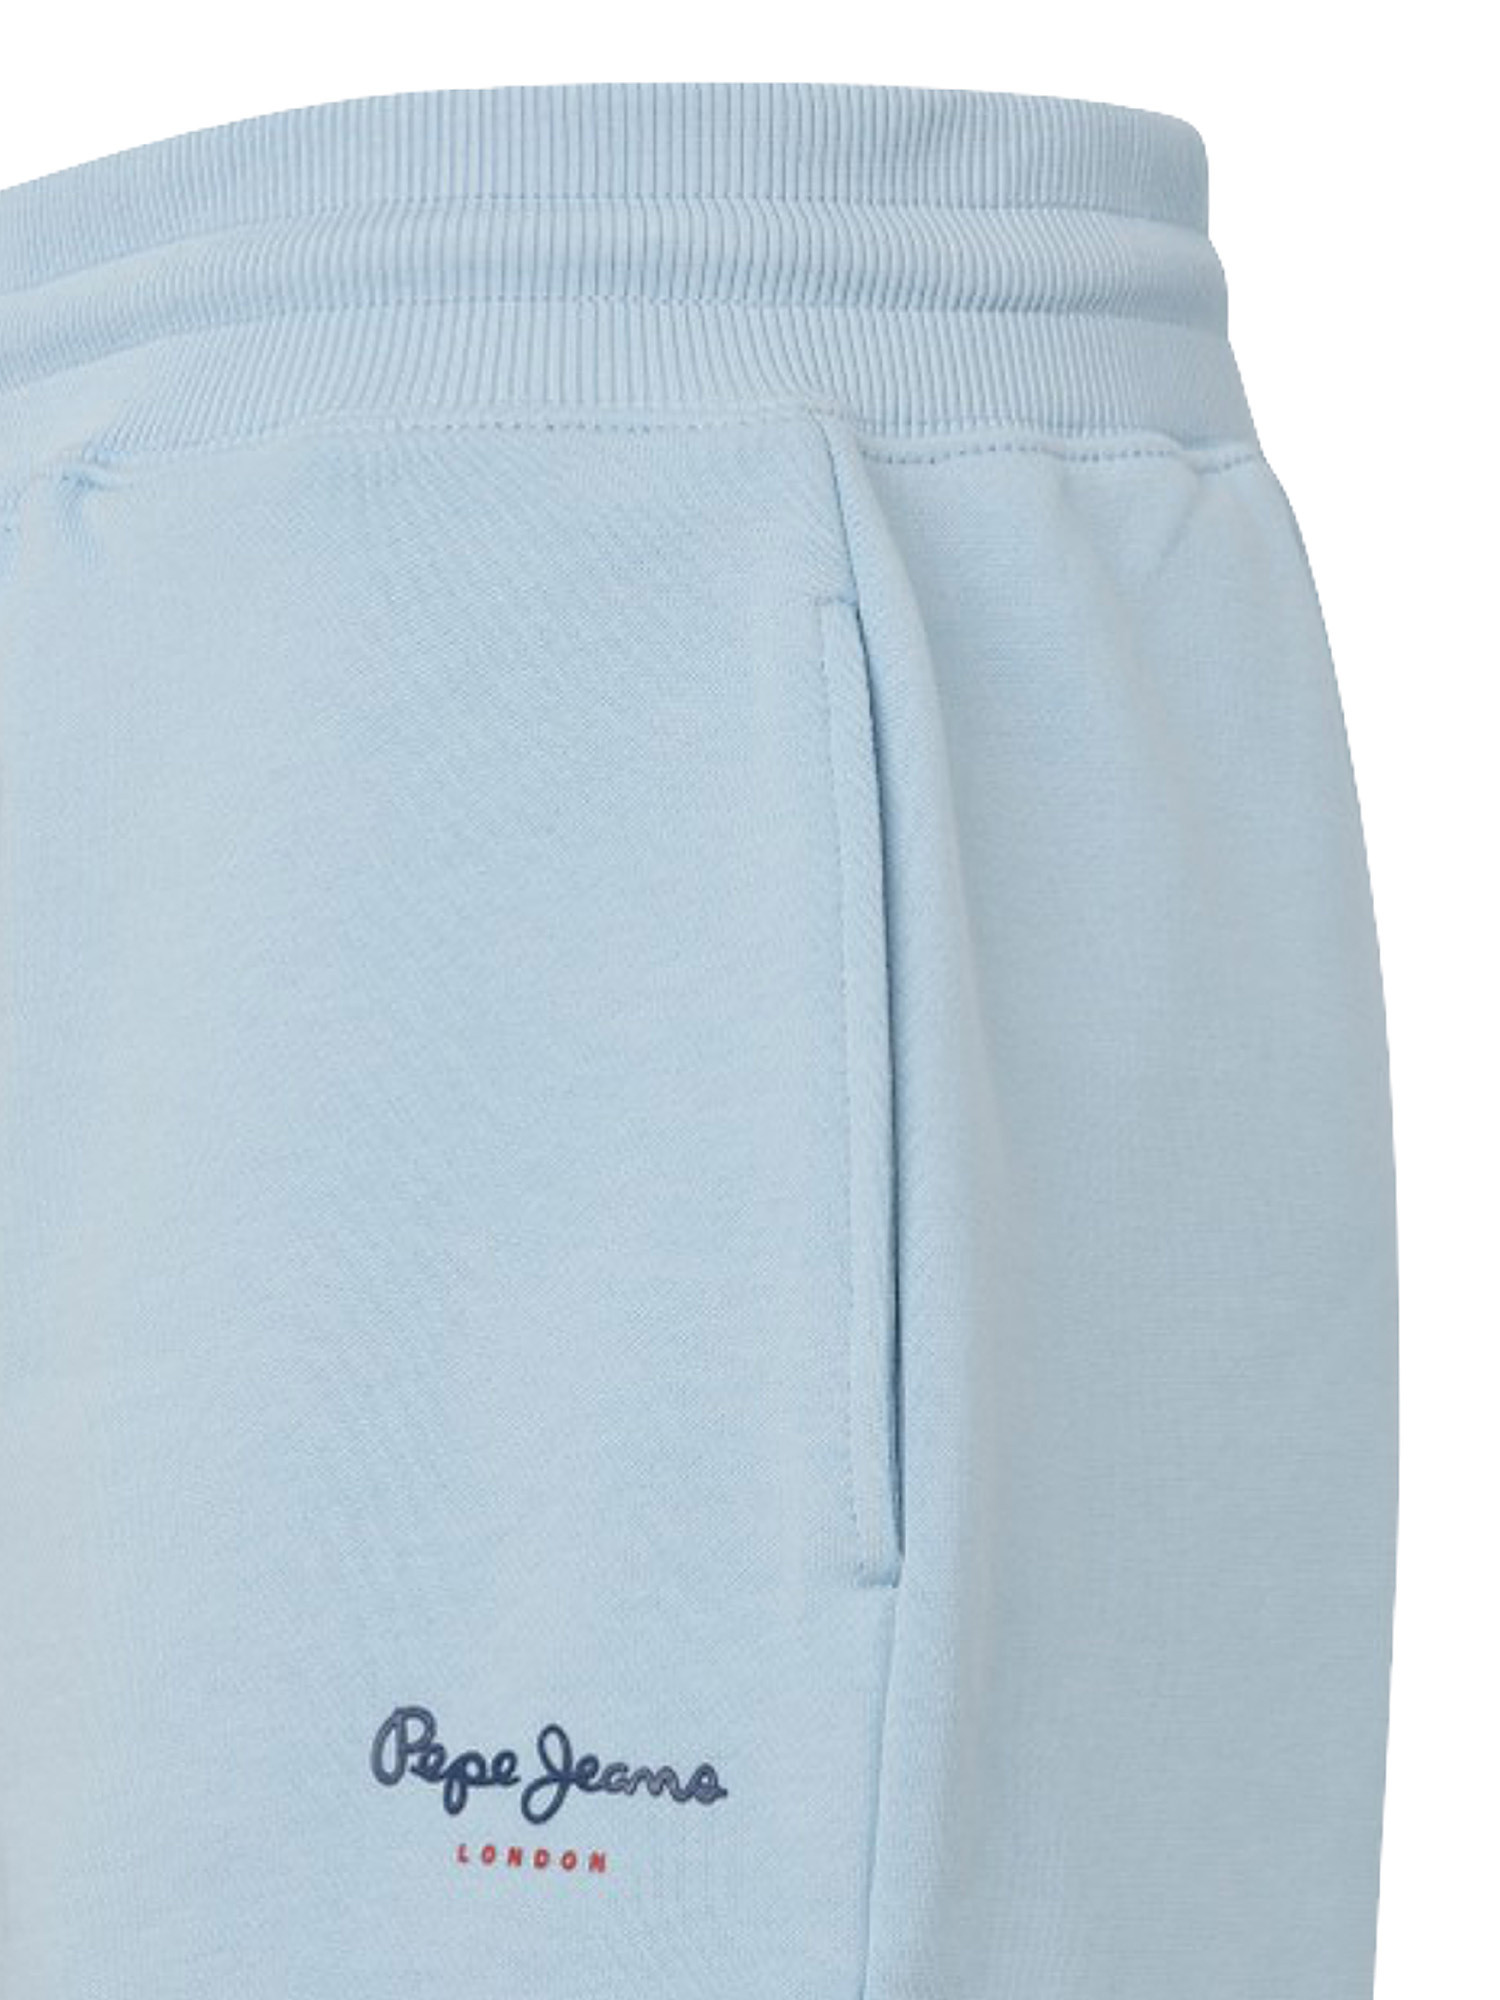 Pantaloncini con elastico in vita, Azzurro celeste, large image number 2